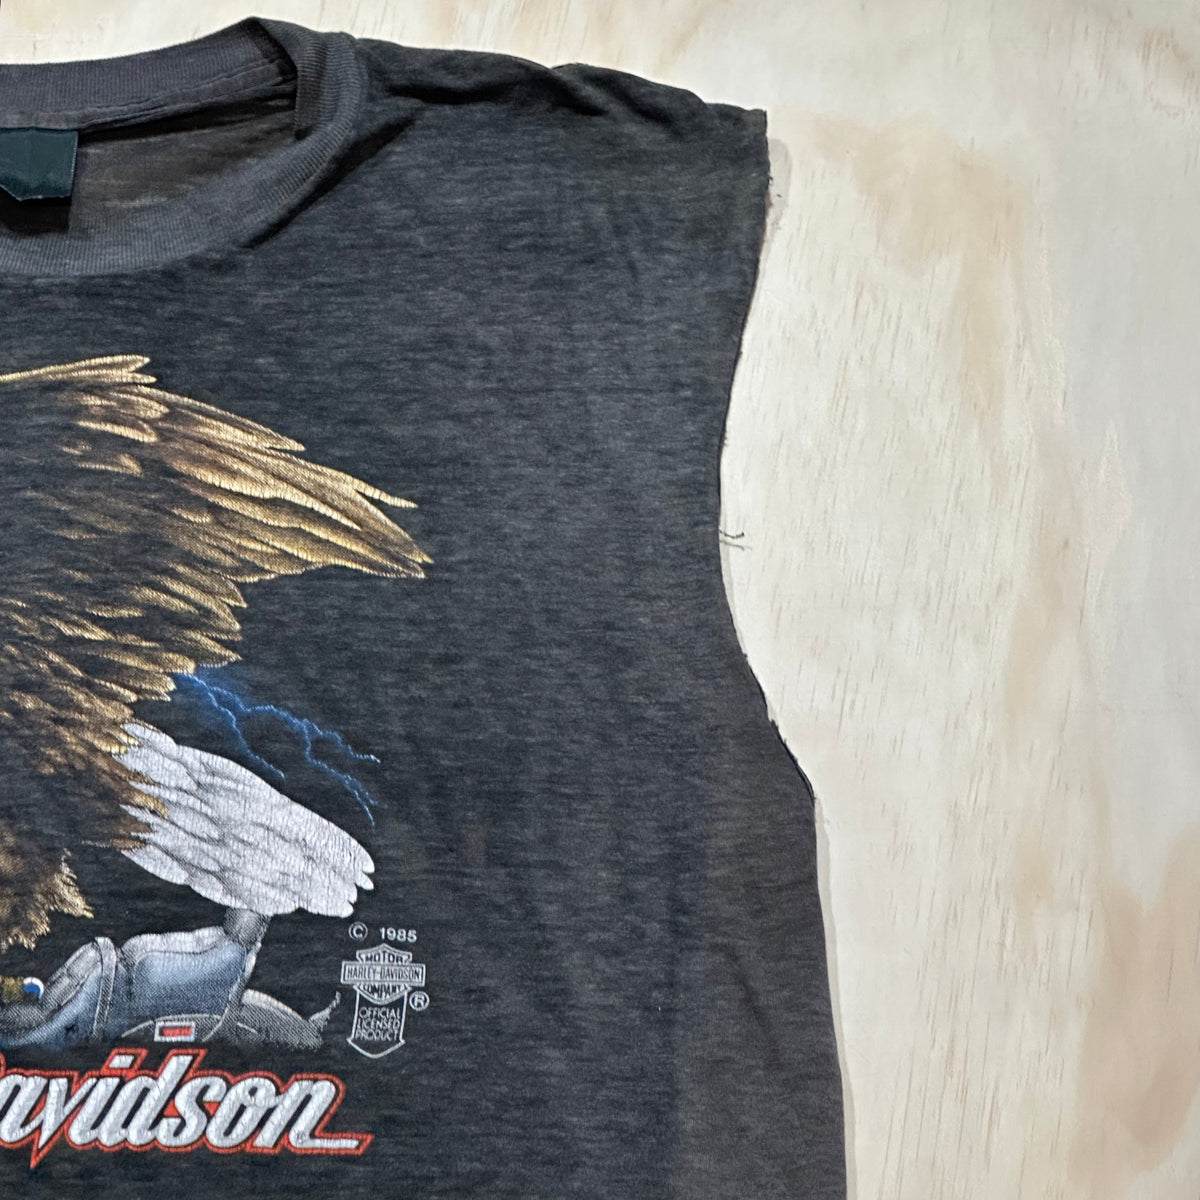 1985 Vintage Harley Davidson House Of Harley Anchorage Alaska shirt